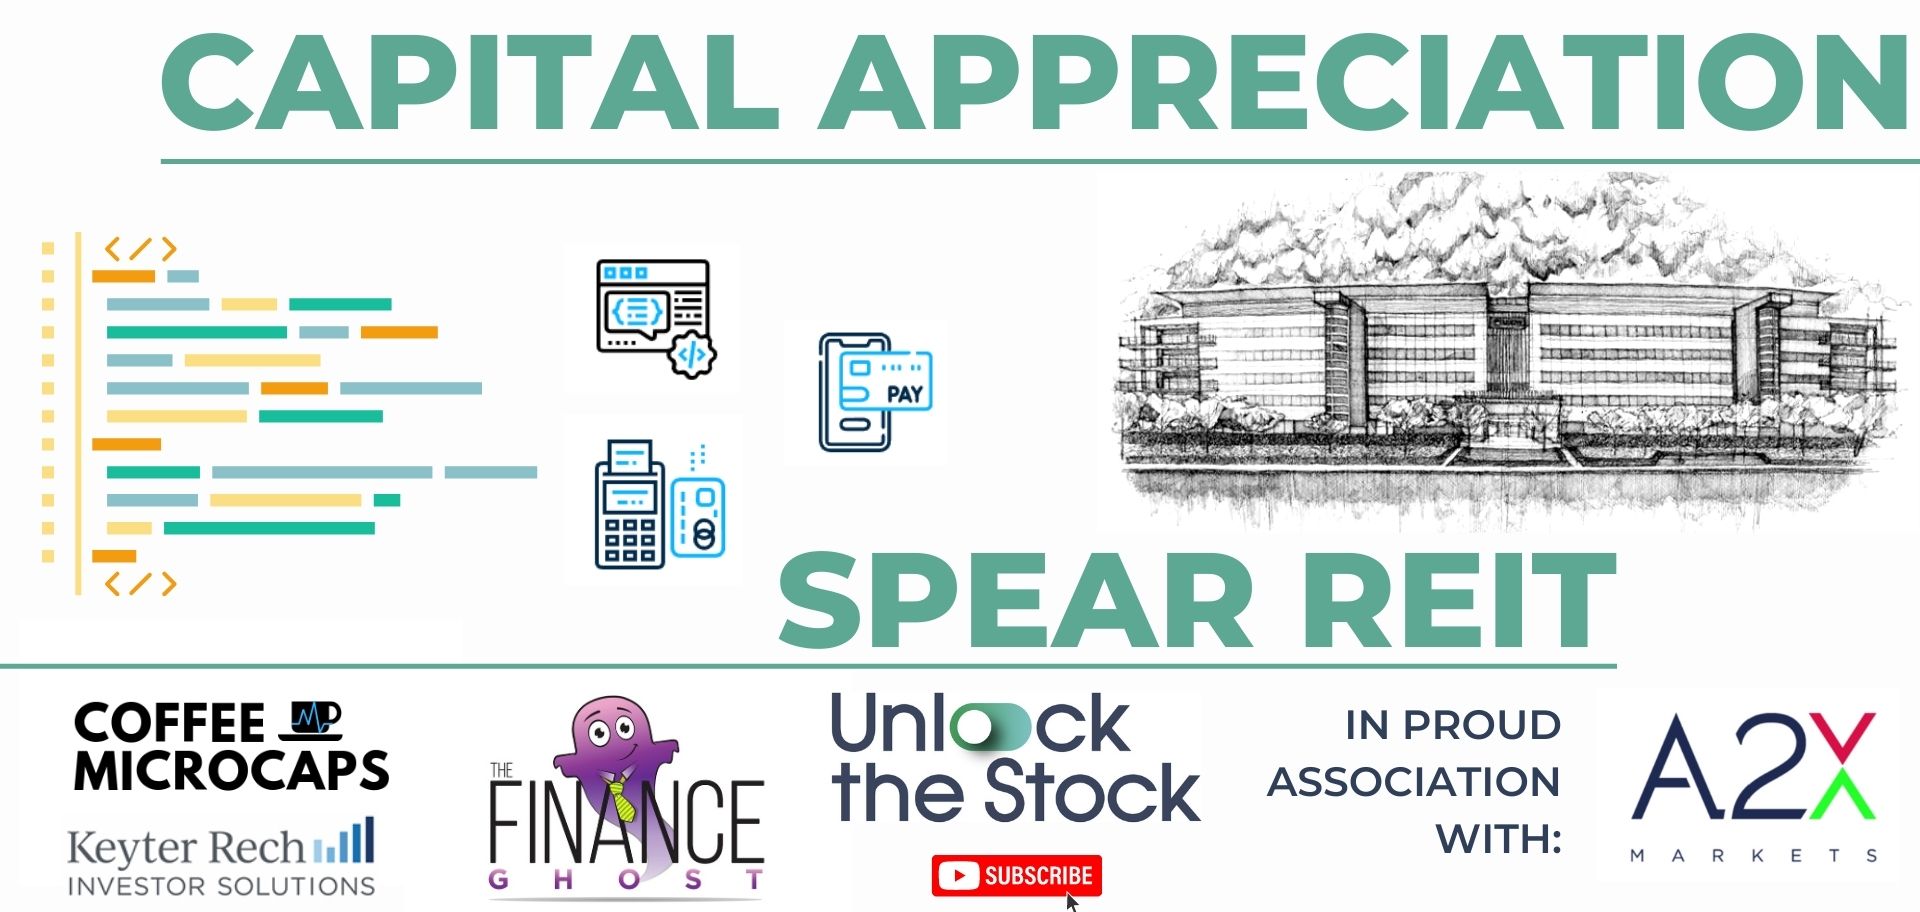 Unlock the Stock: Capital Appreciation and Spear REIT